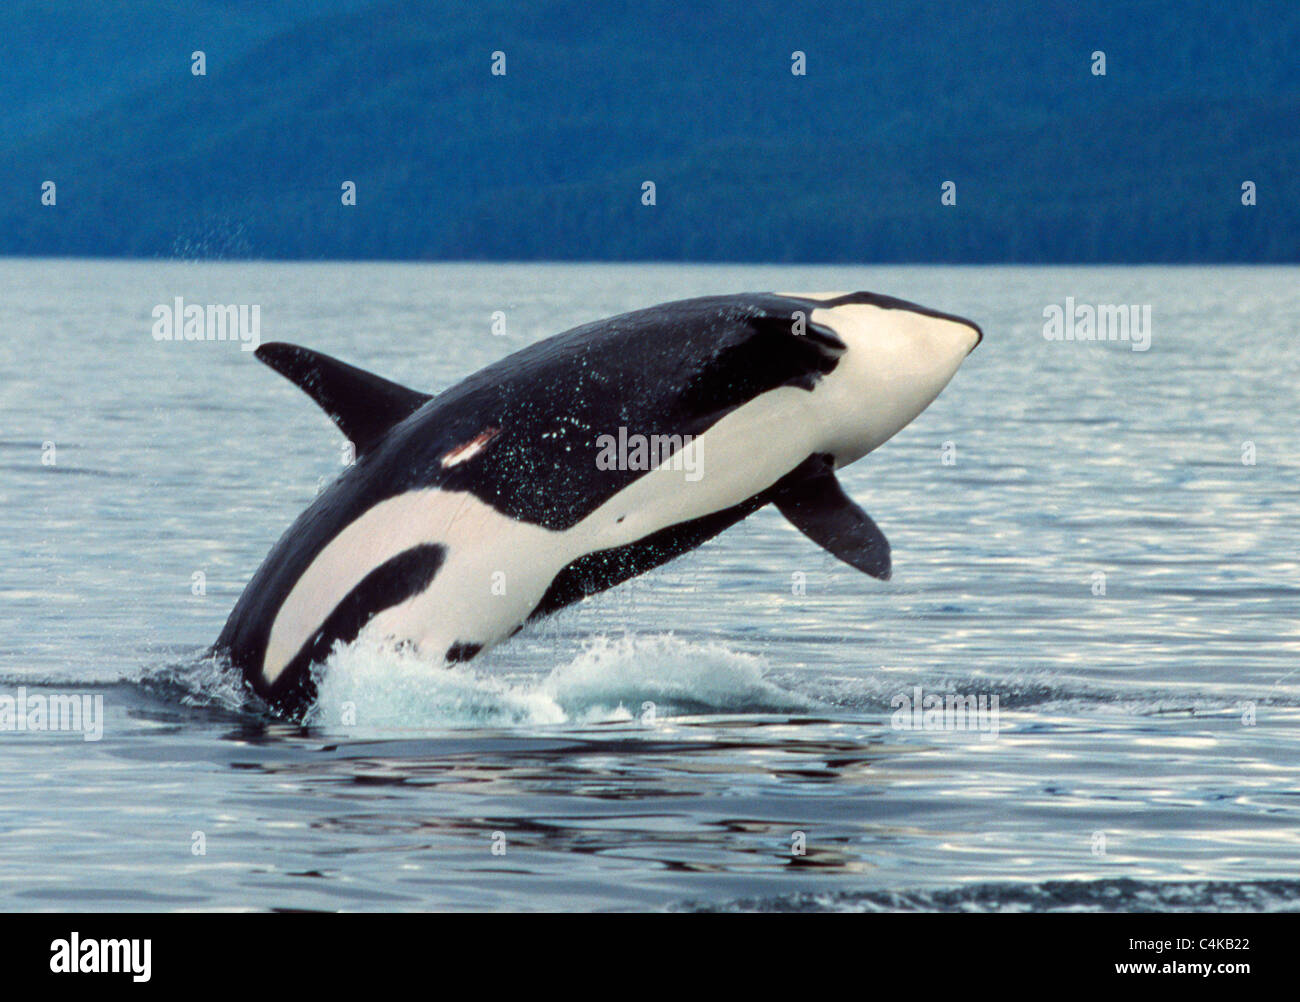 Killer whale breaching Stock Photo